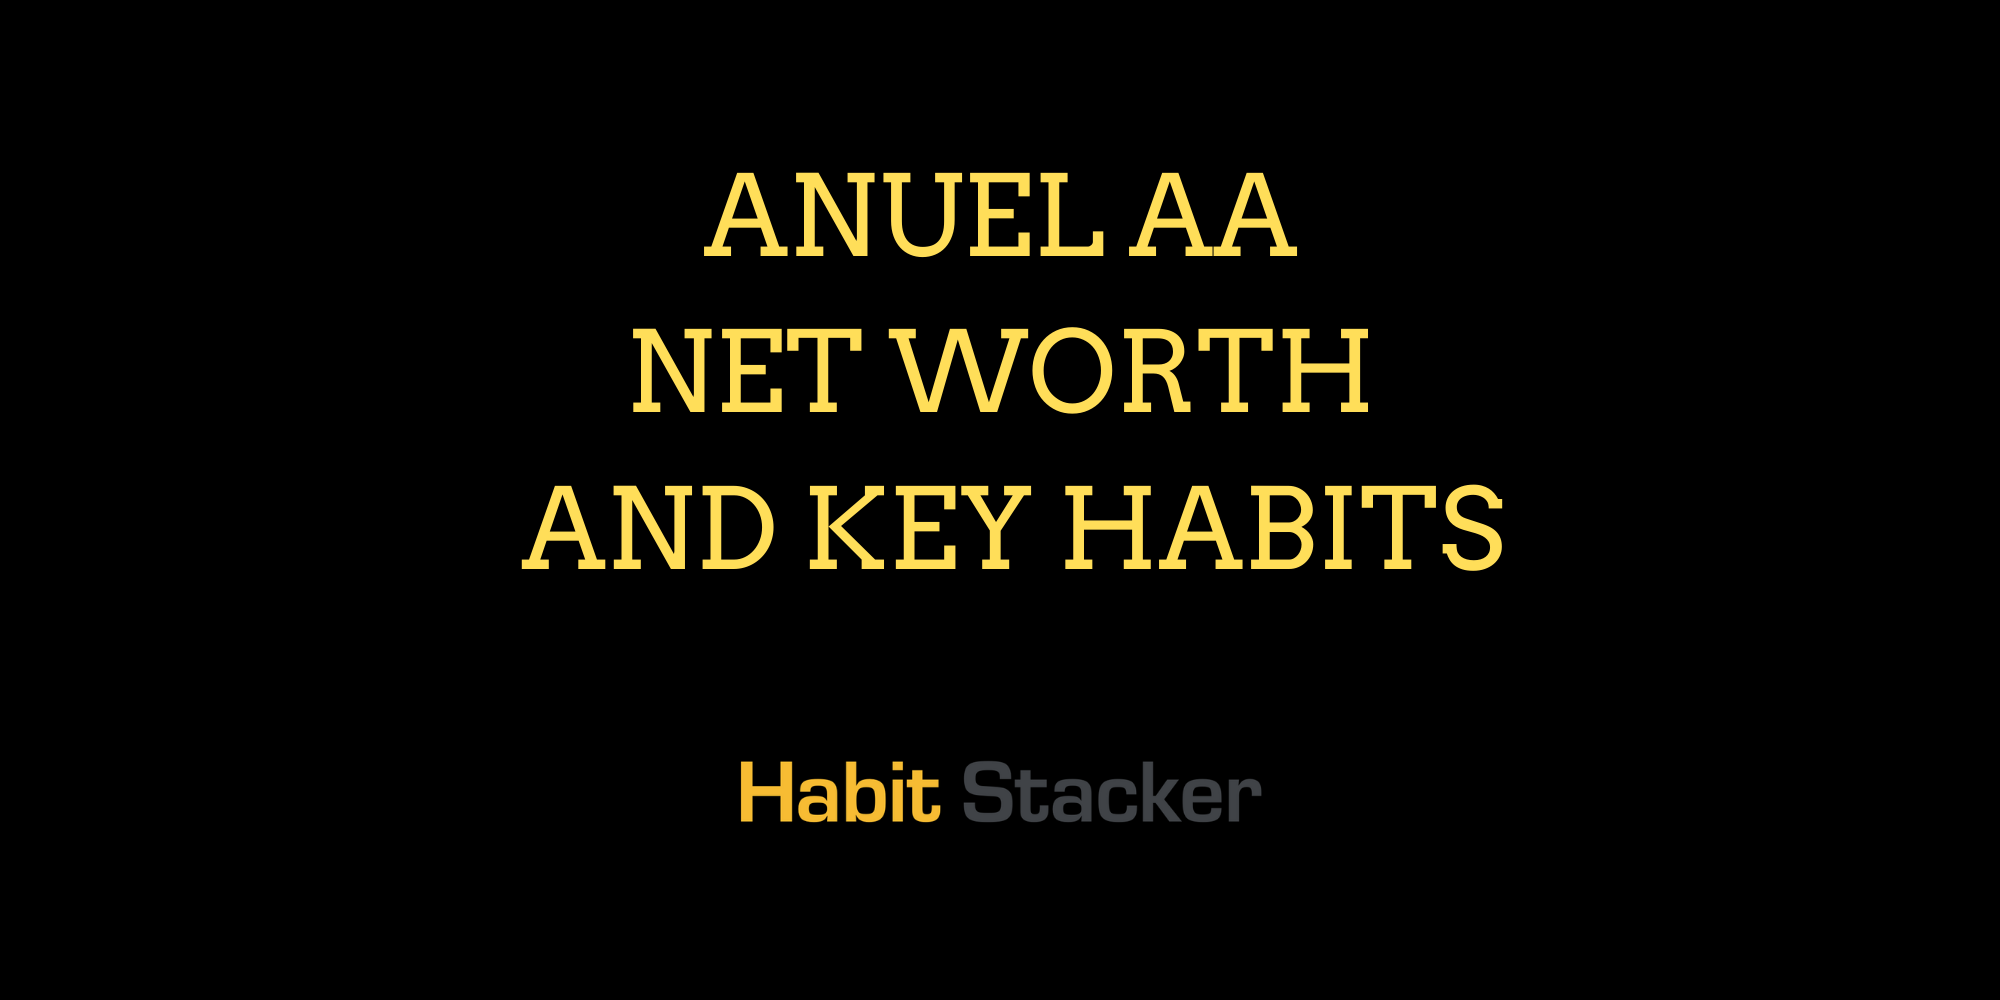 Anuel AA Net Worth and Key Habits